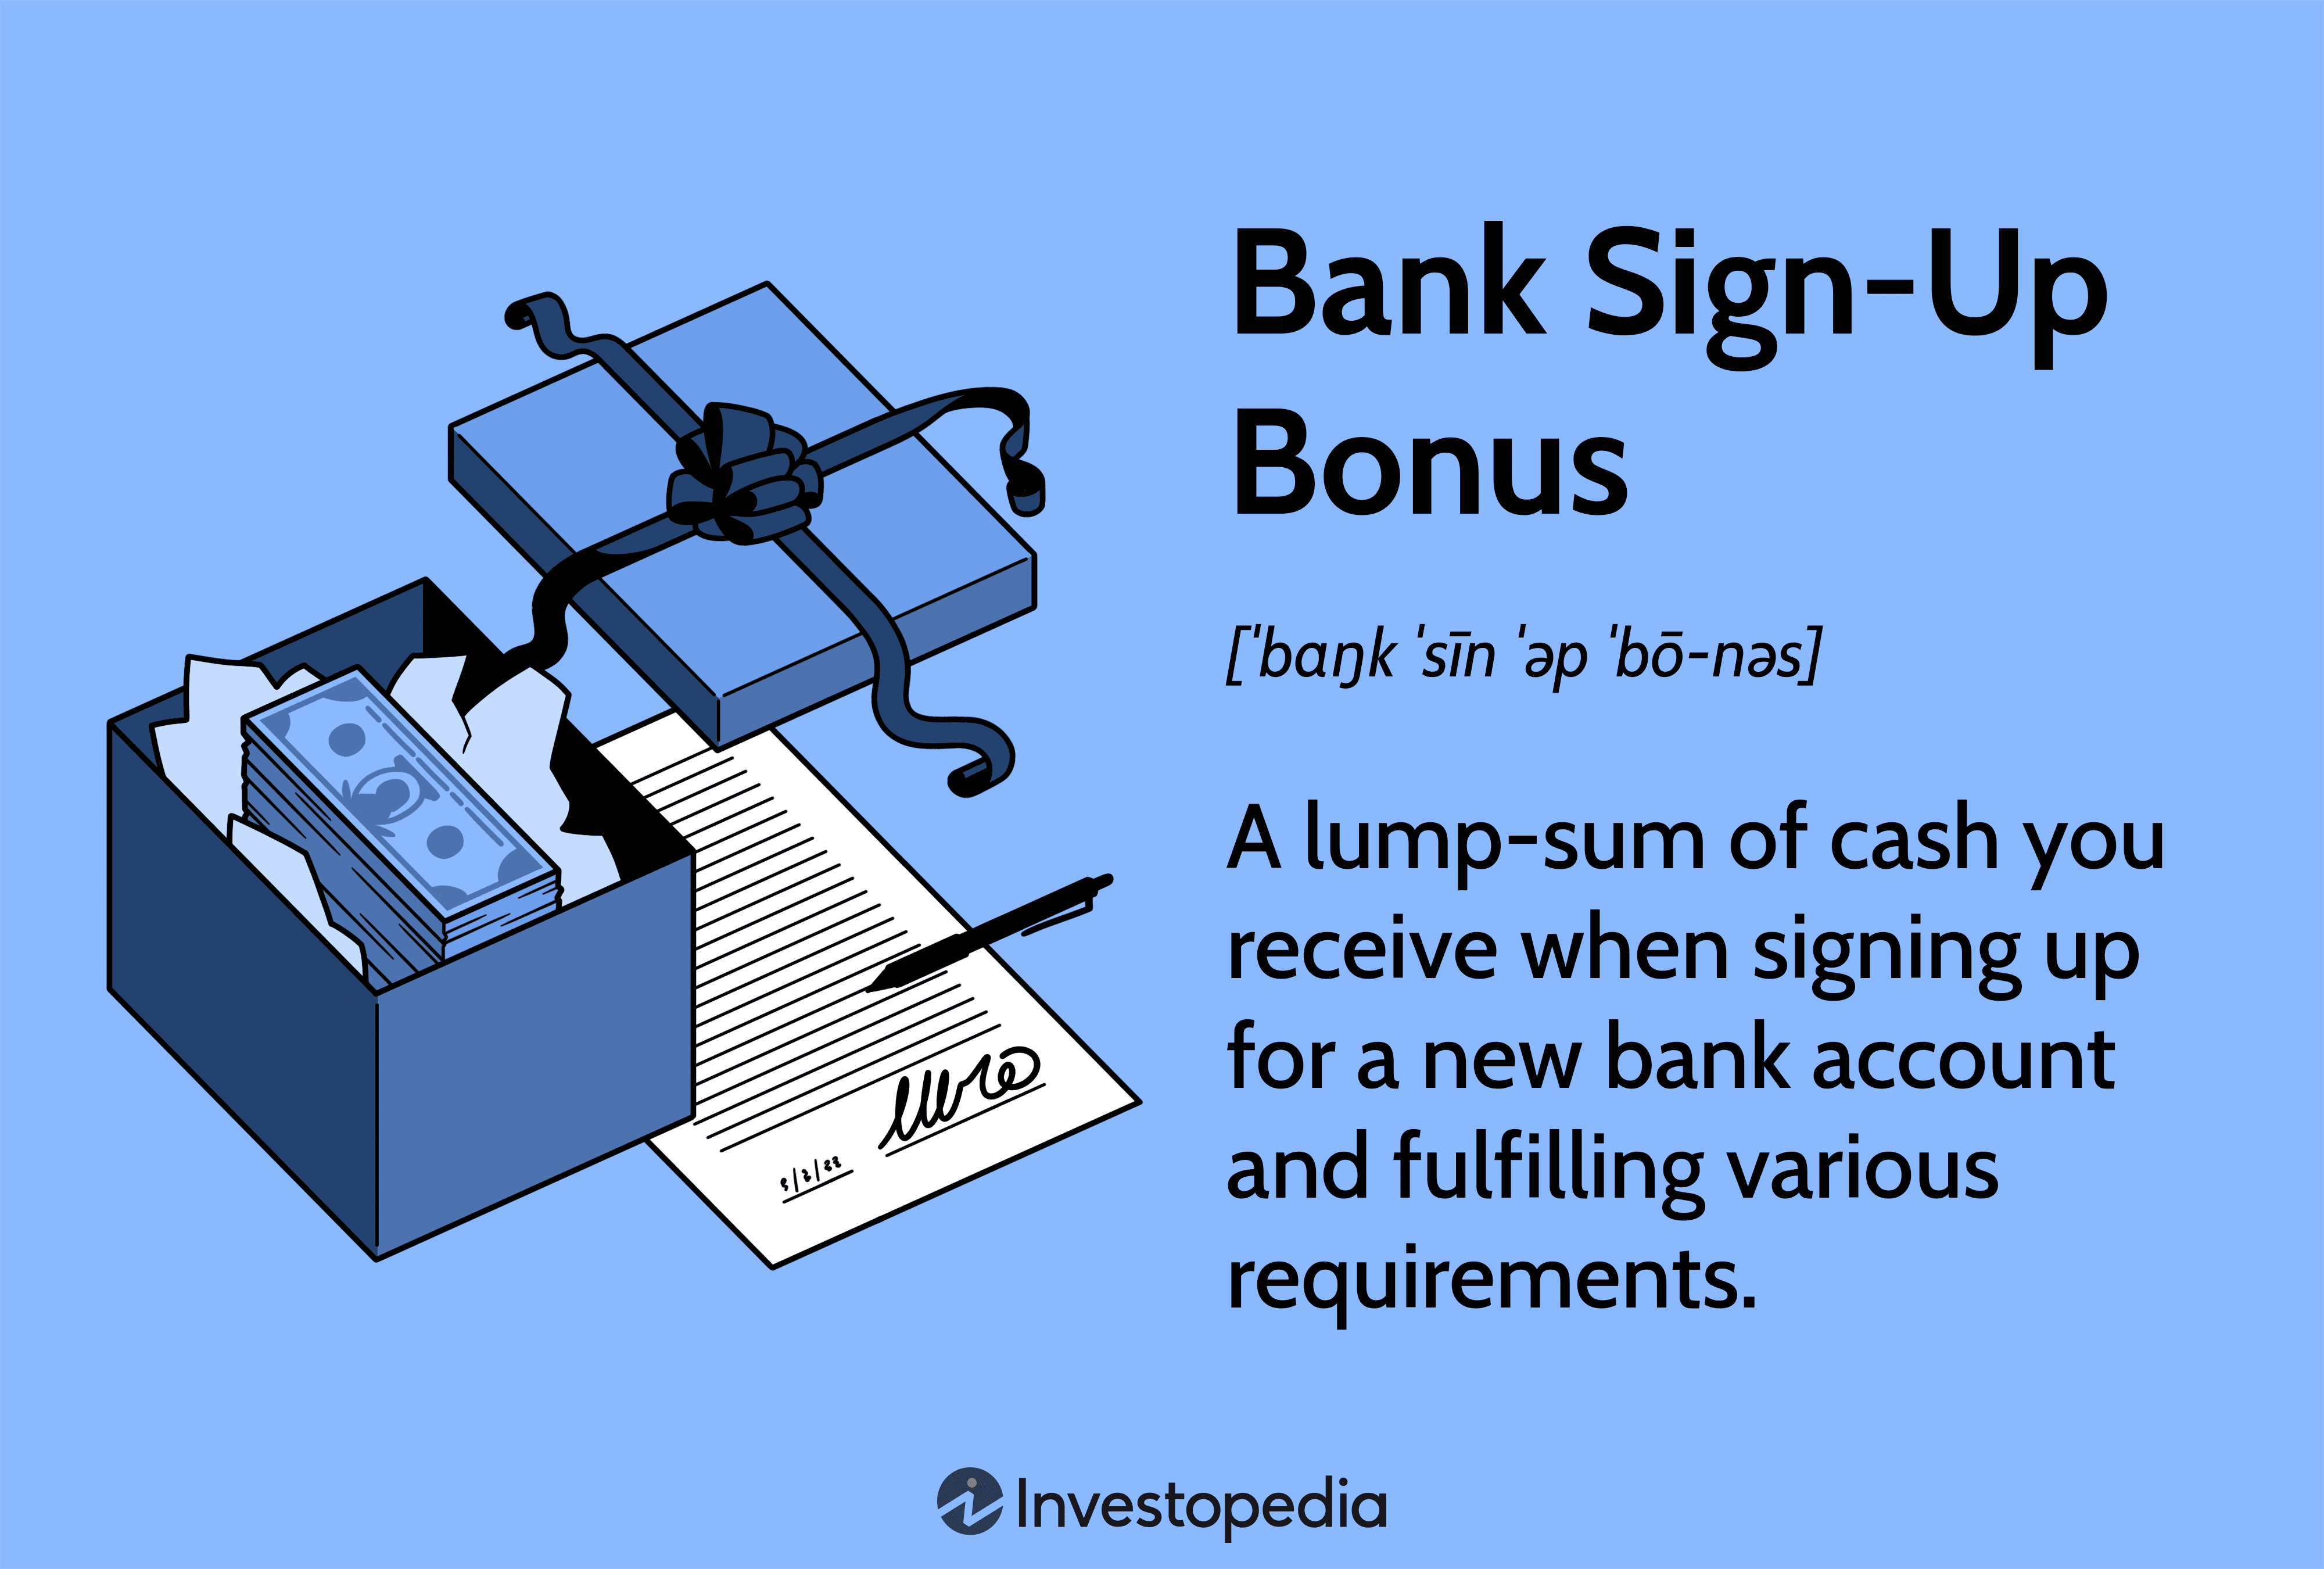 Bank Sign-Up Bonus